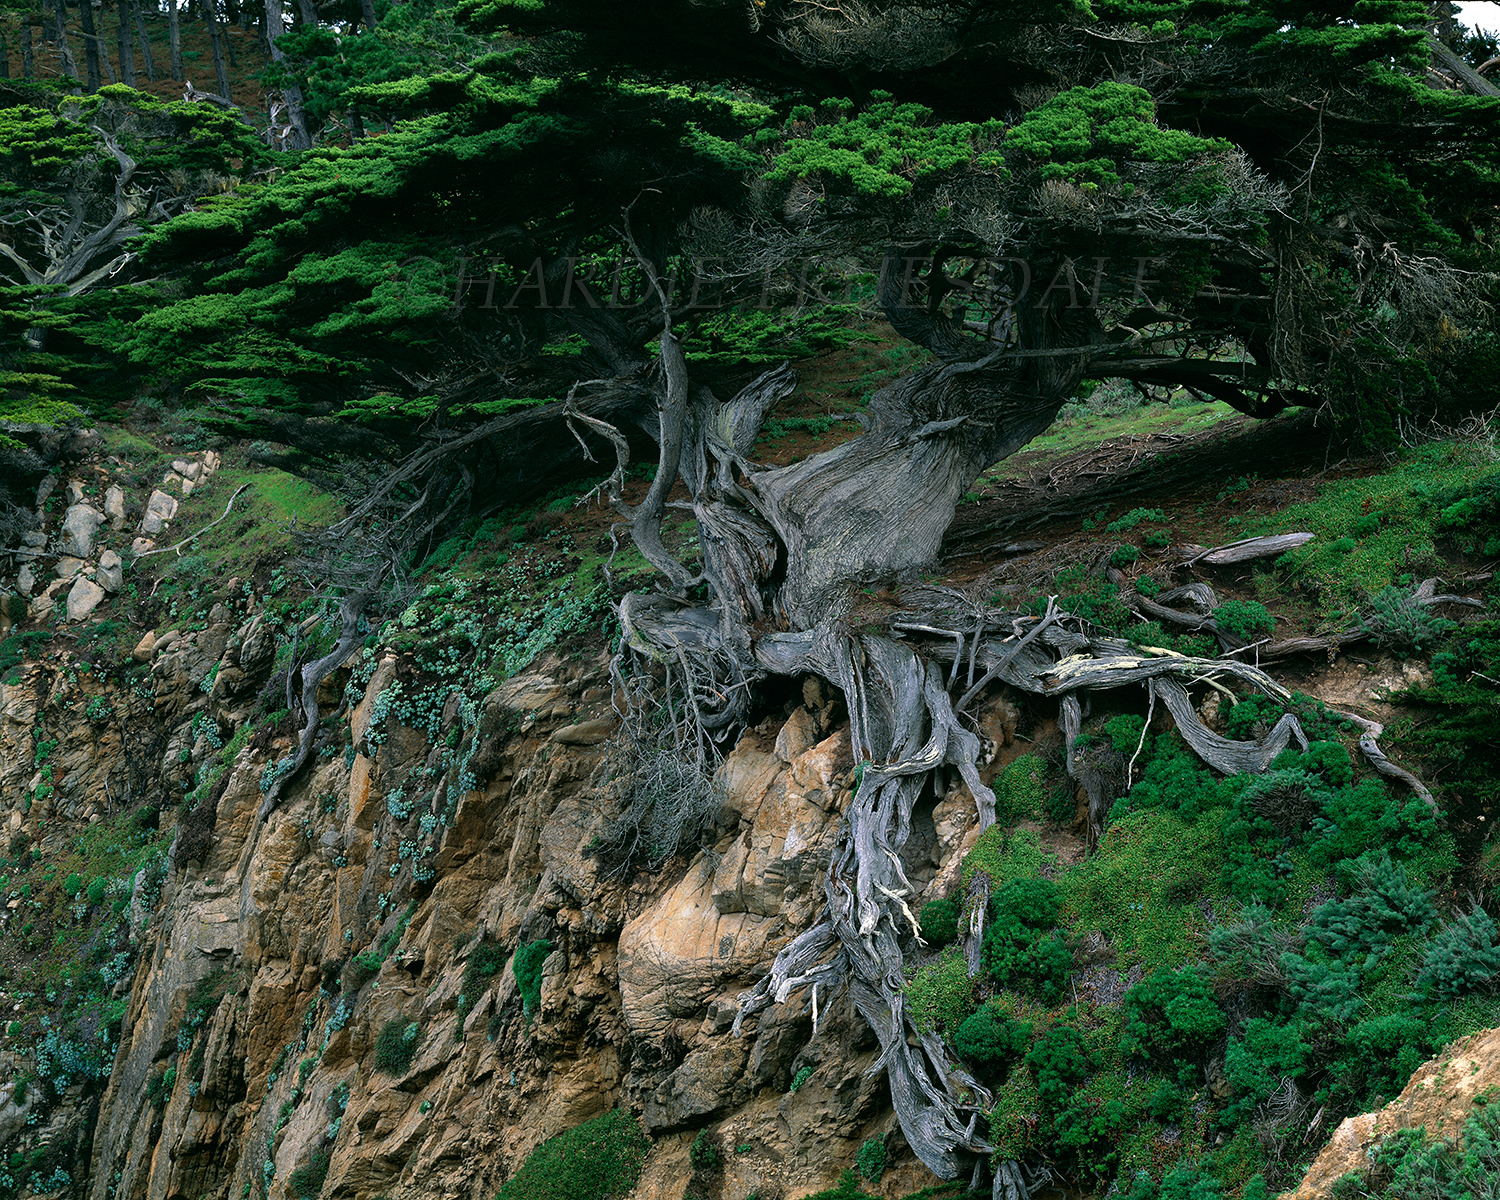 CA#12 "Old Veteran Cypress, Point Lobos"